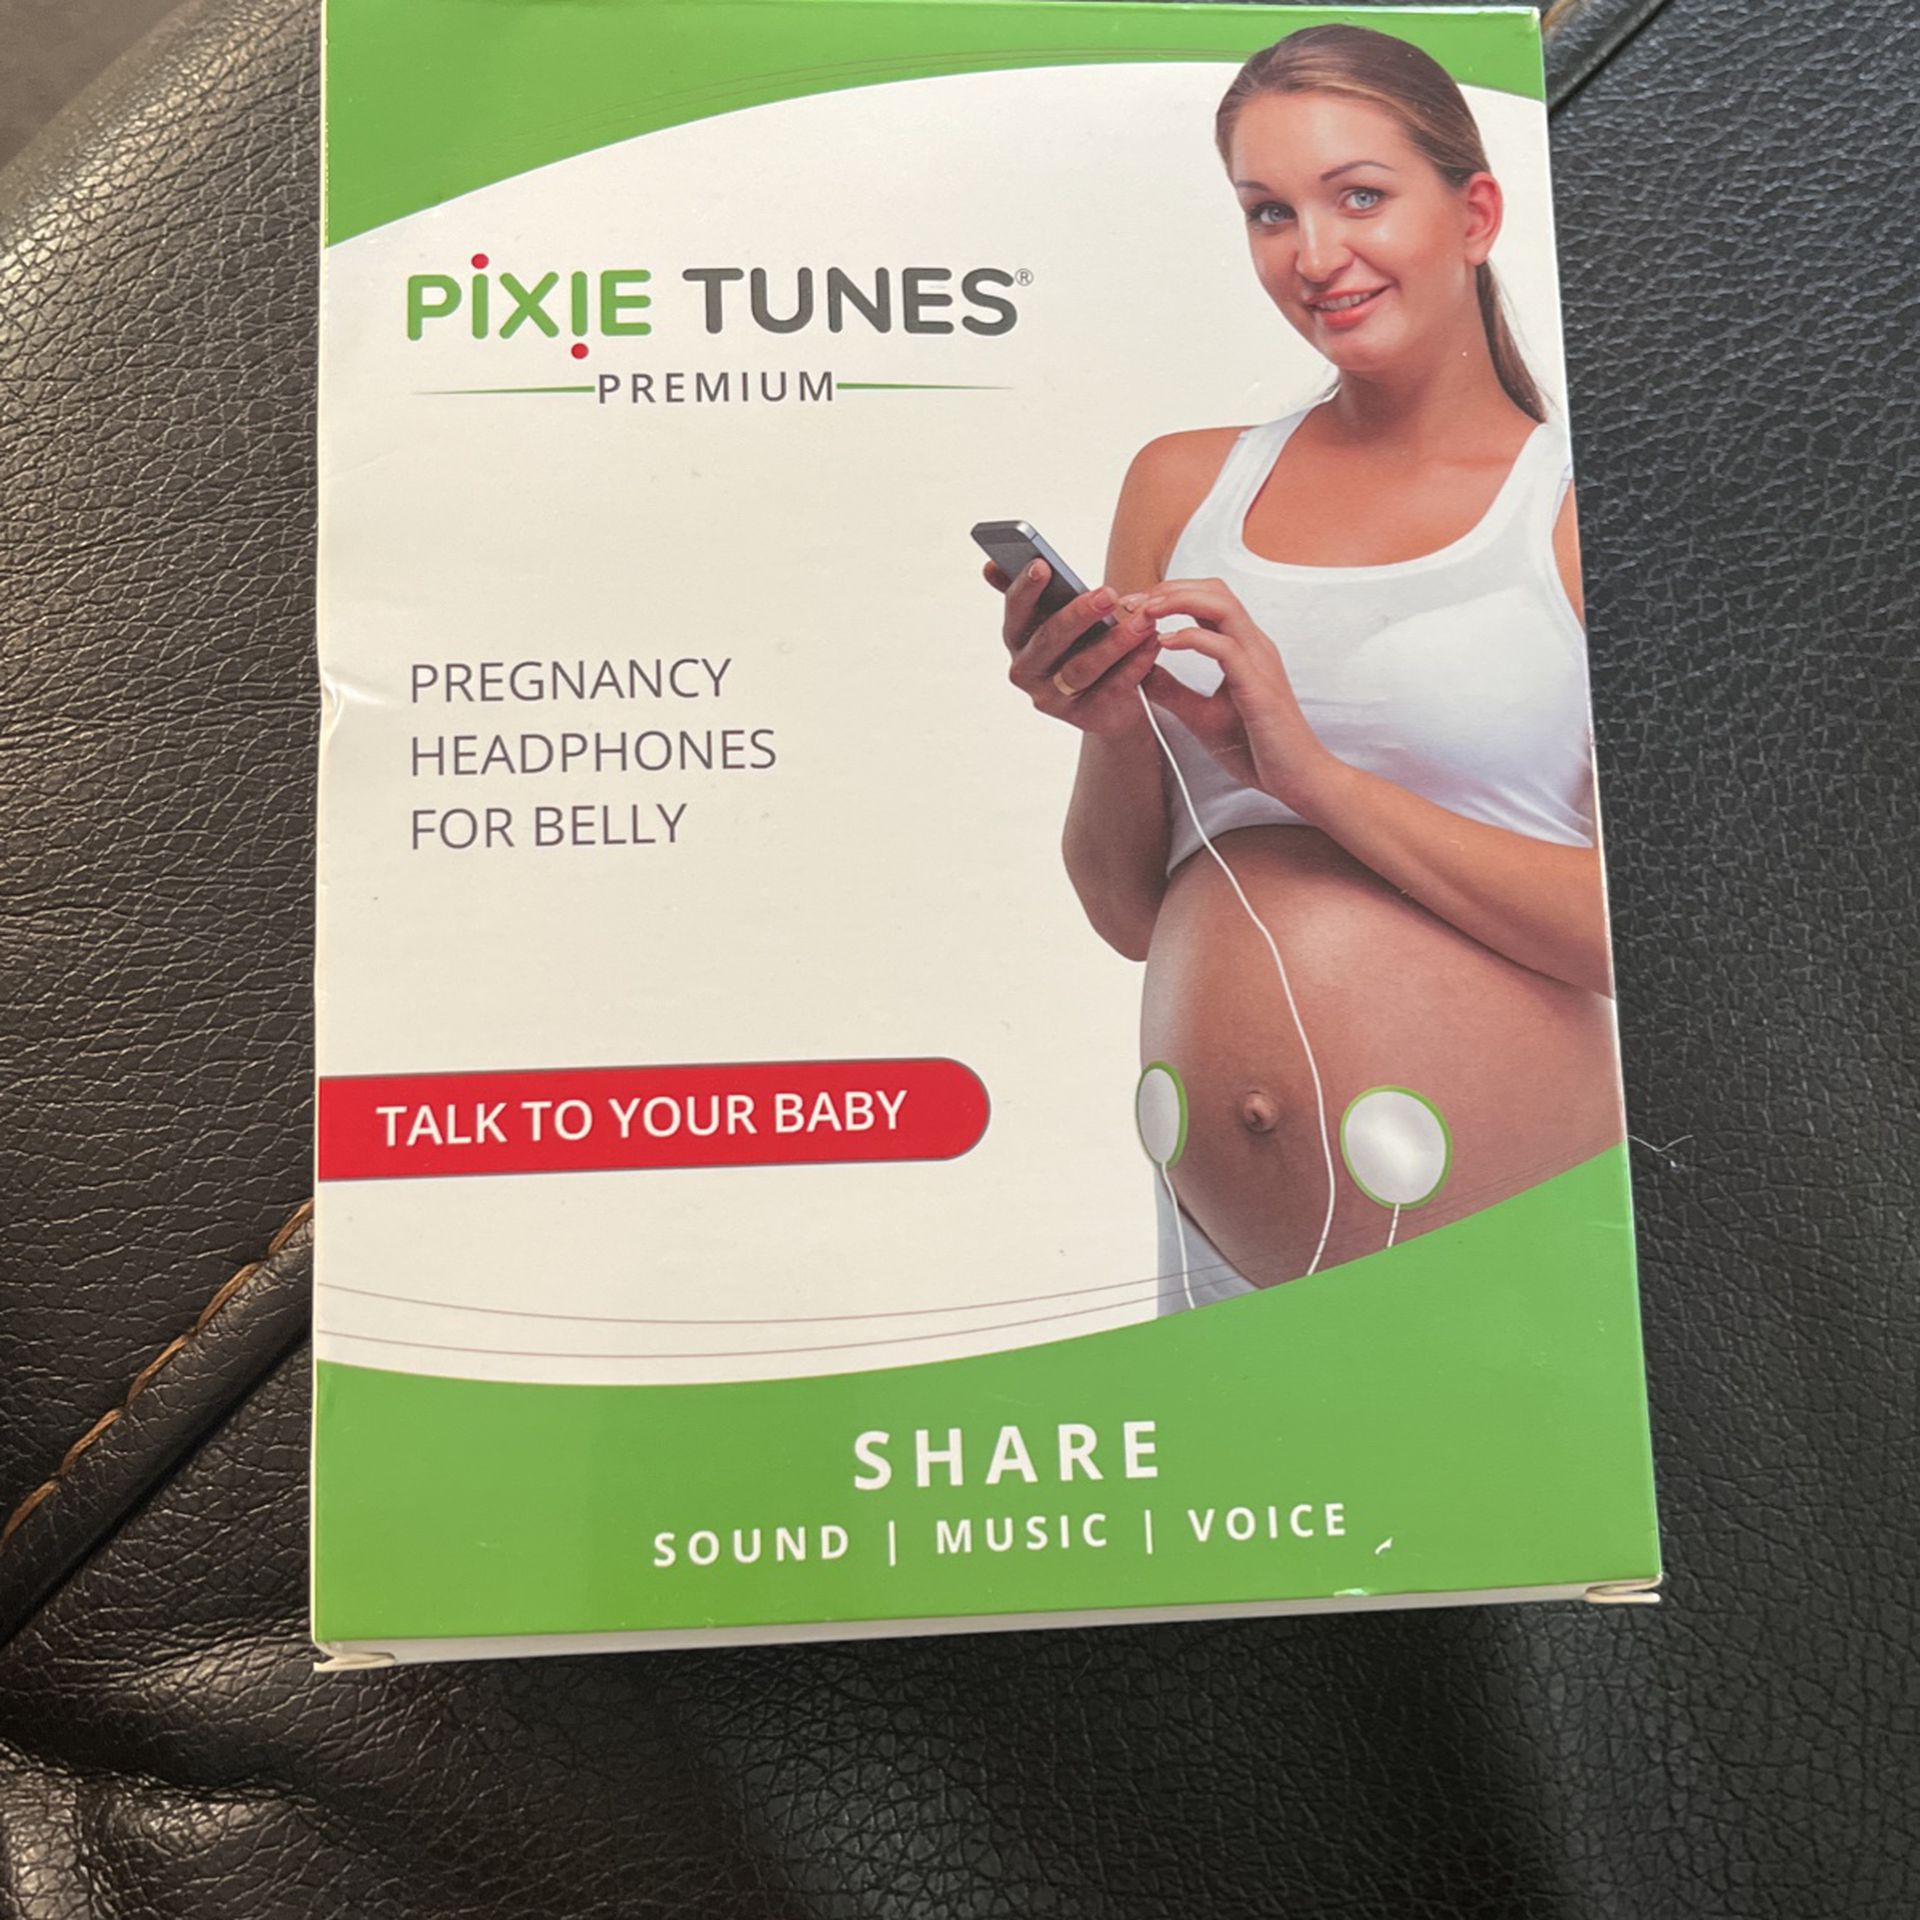 PIXIE TUNES PREGNANCY HEADPHONES FOR BELLY